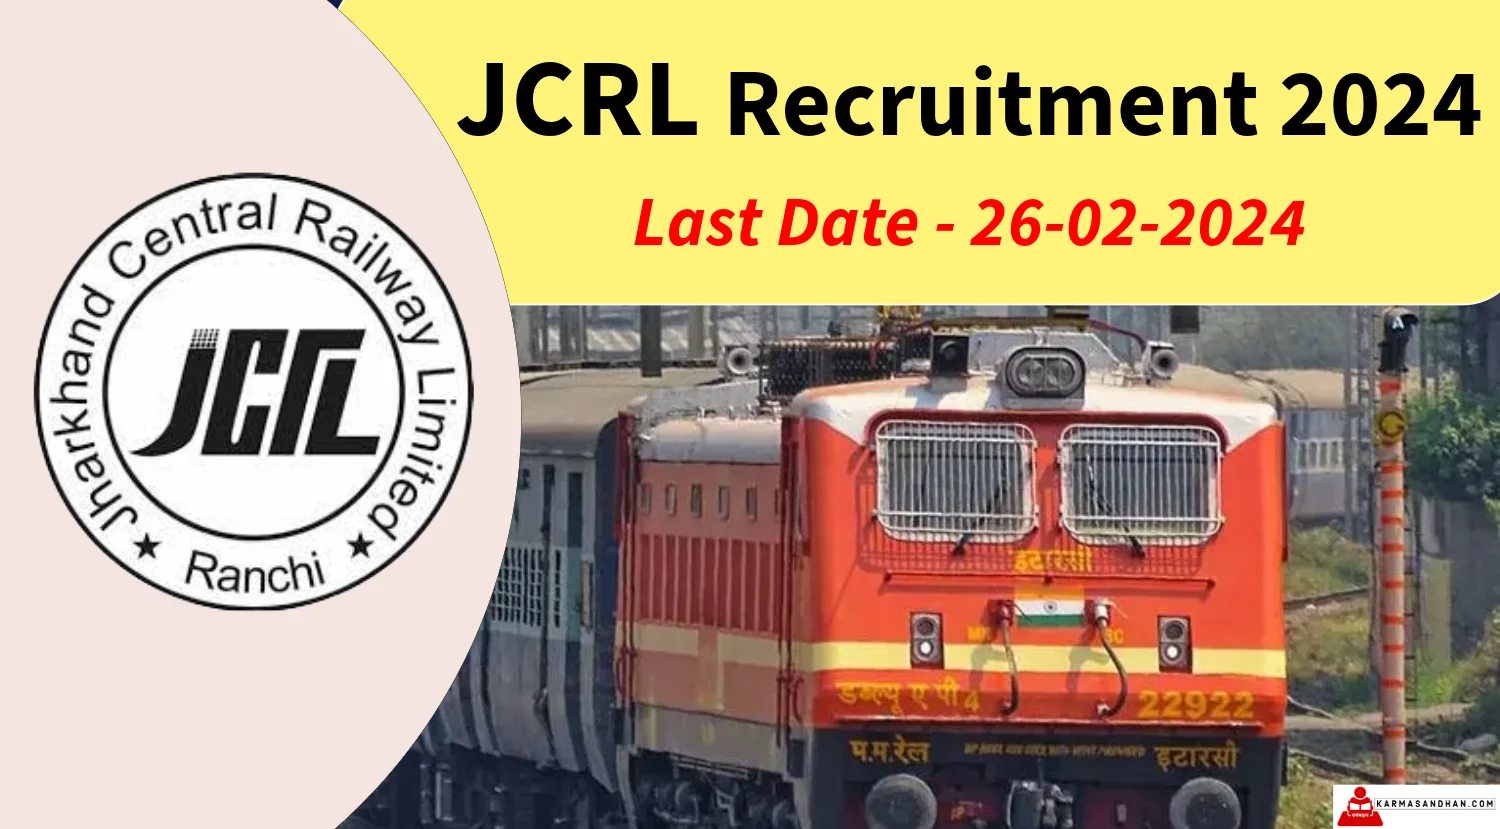 JCRL Recruitment 2024 Notification out